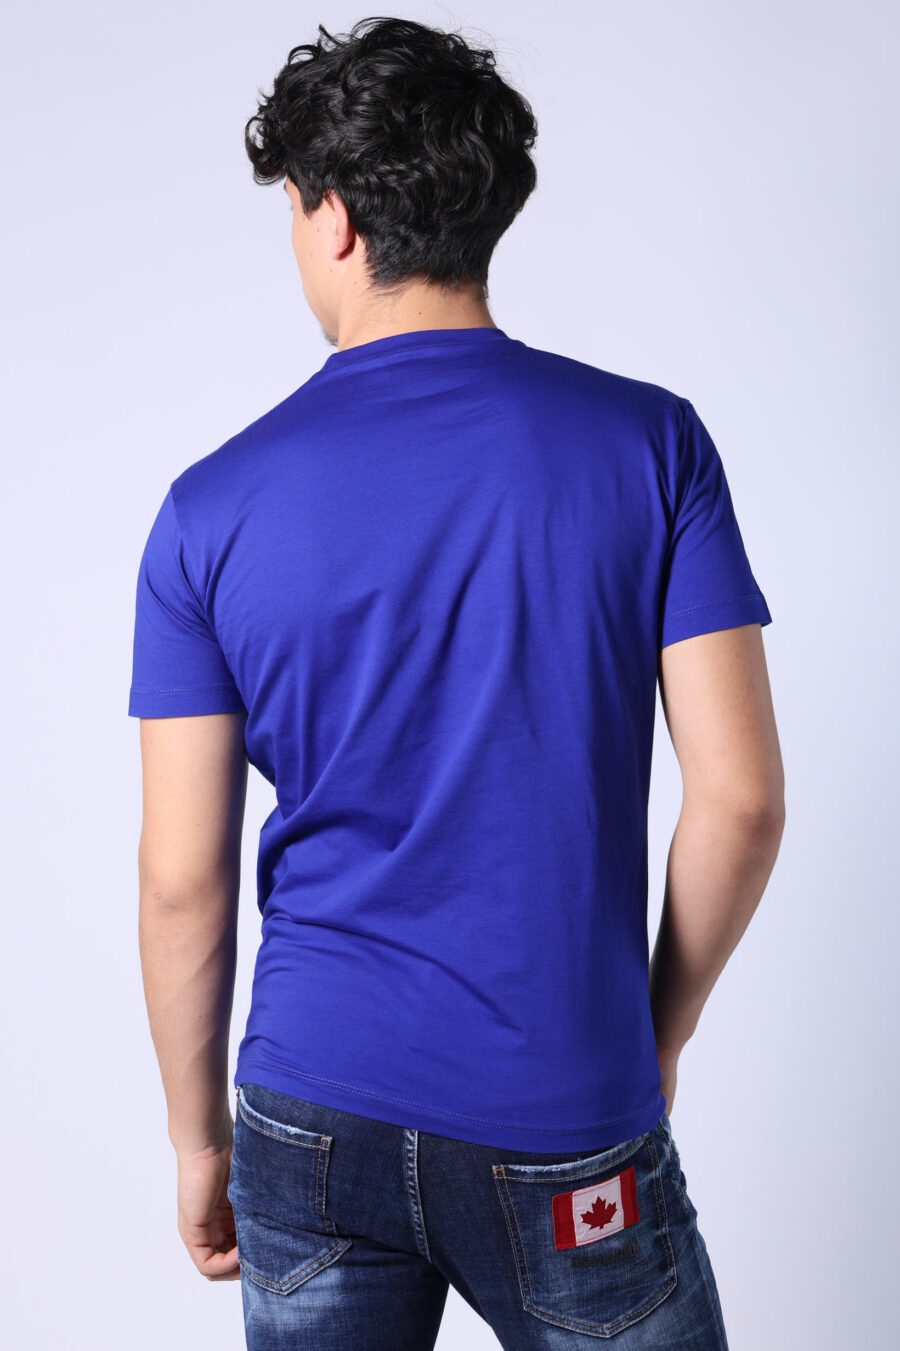 Camiseta azul electrico con maxilogo "icon" blanco - Untitled Catalog 05401